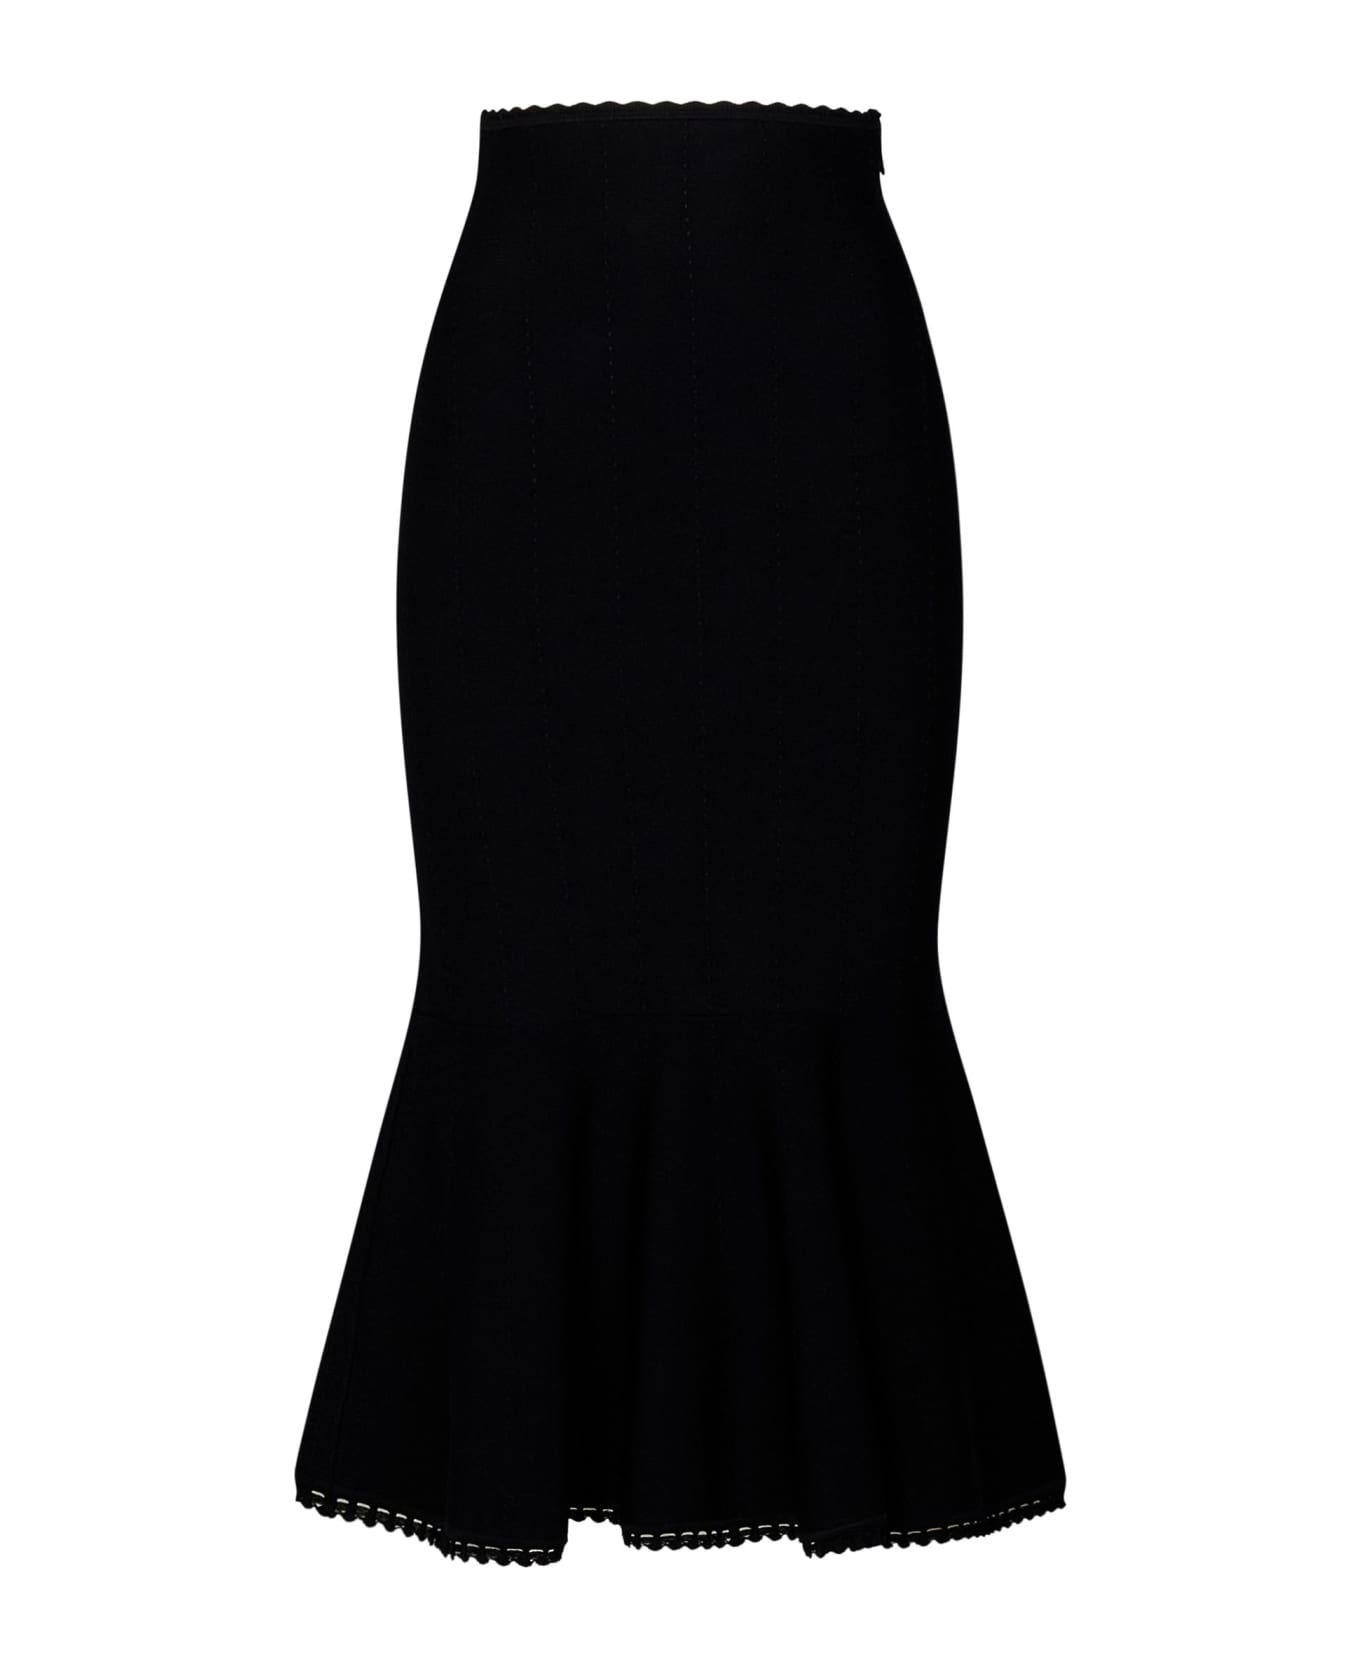 Victoria Beckham Vb Body Skirt - Black